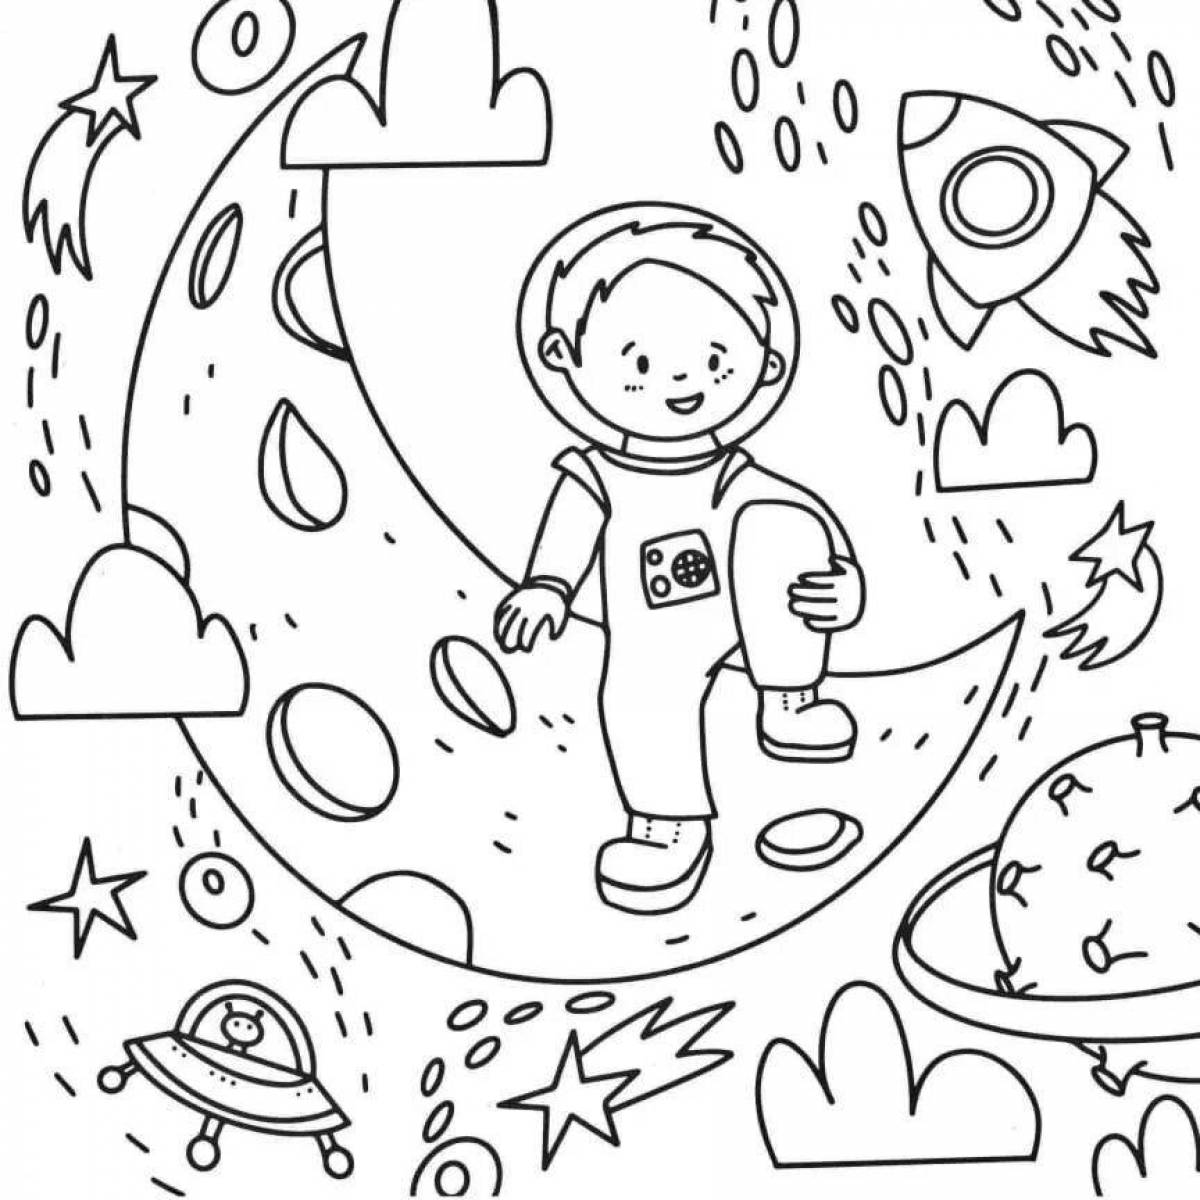 Celestial space cartoon coloring book